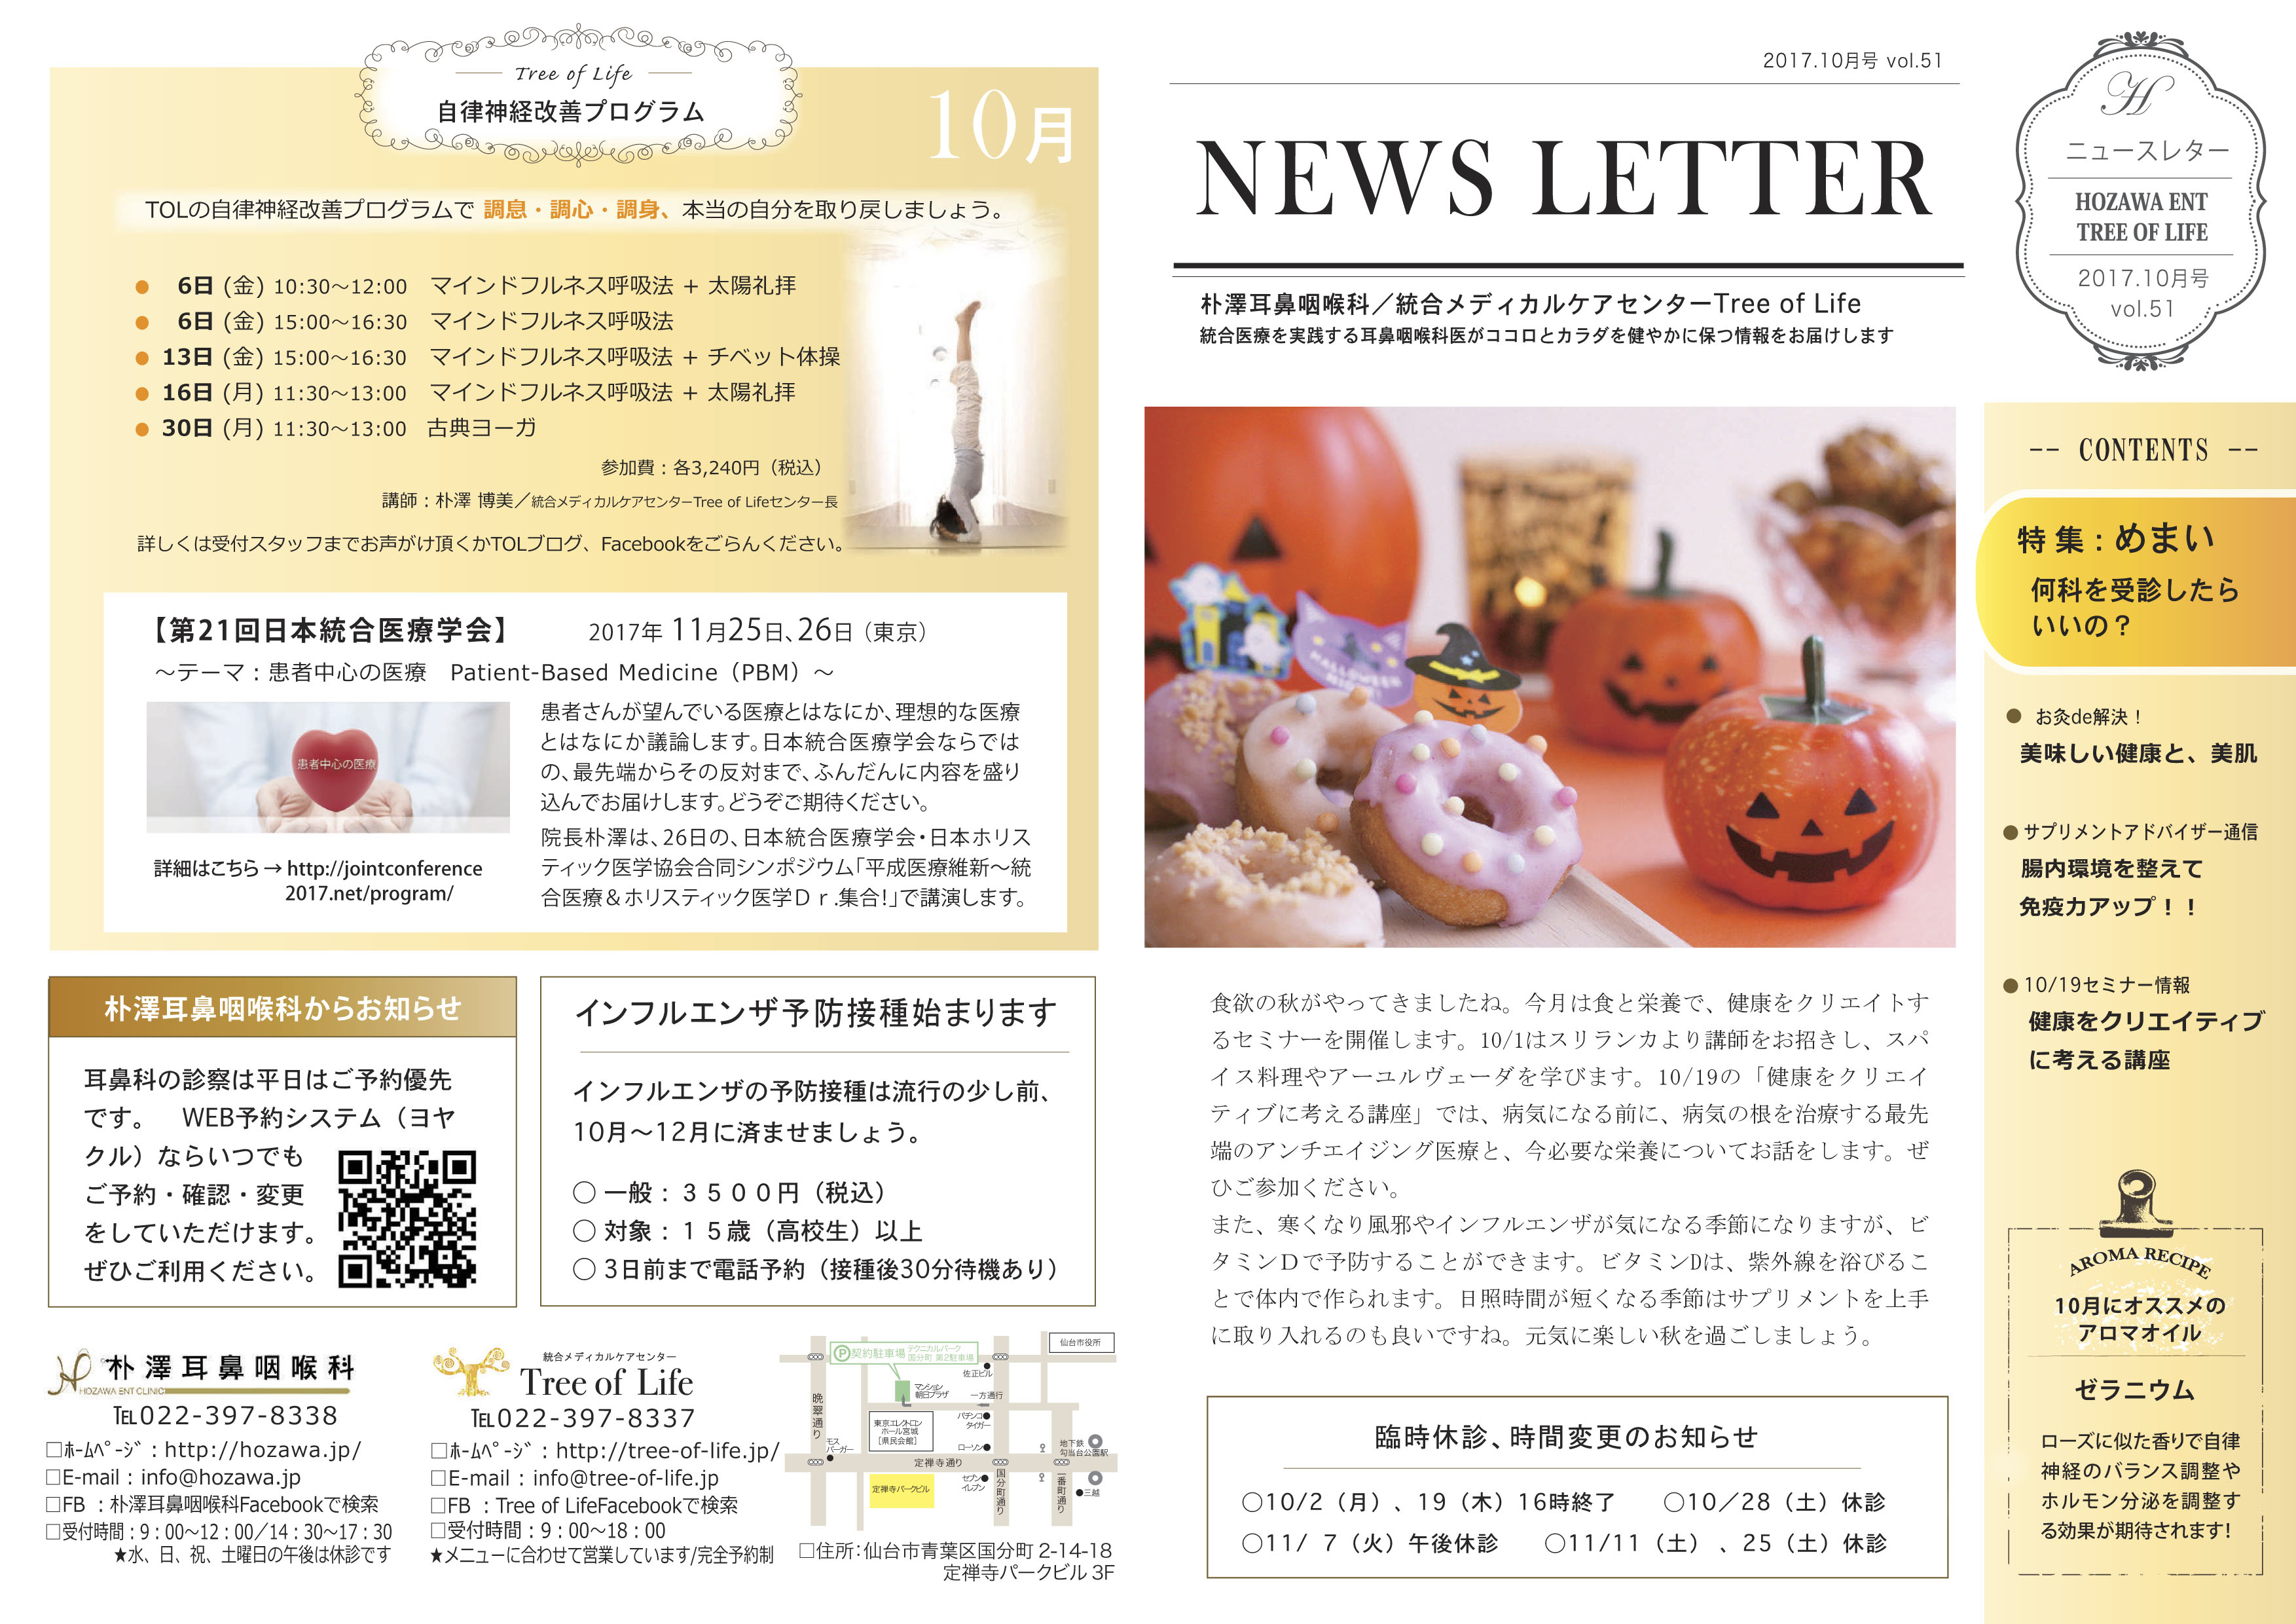 http://hozawa.jp/news/news_img/1709290187_01L-1.jpg